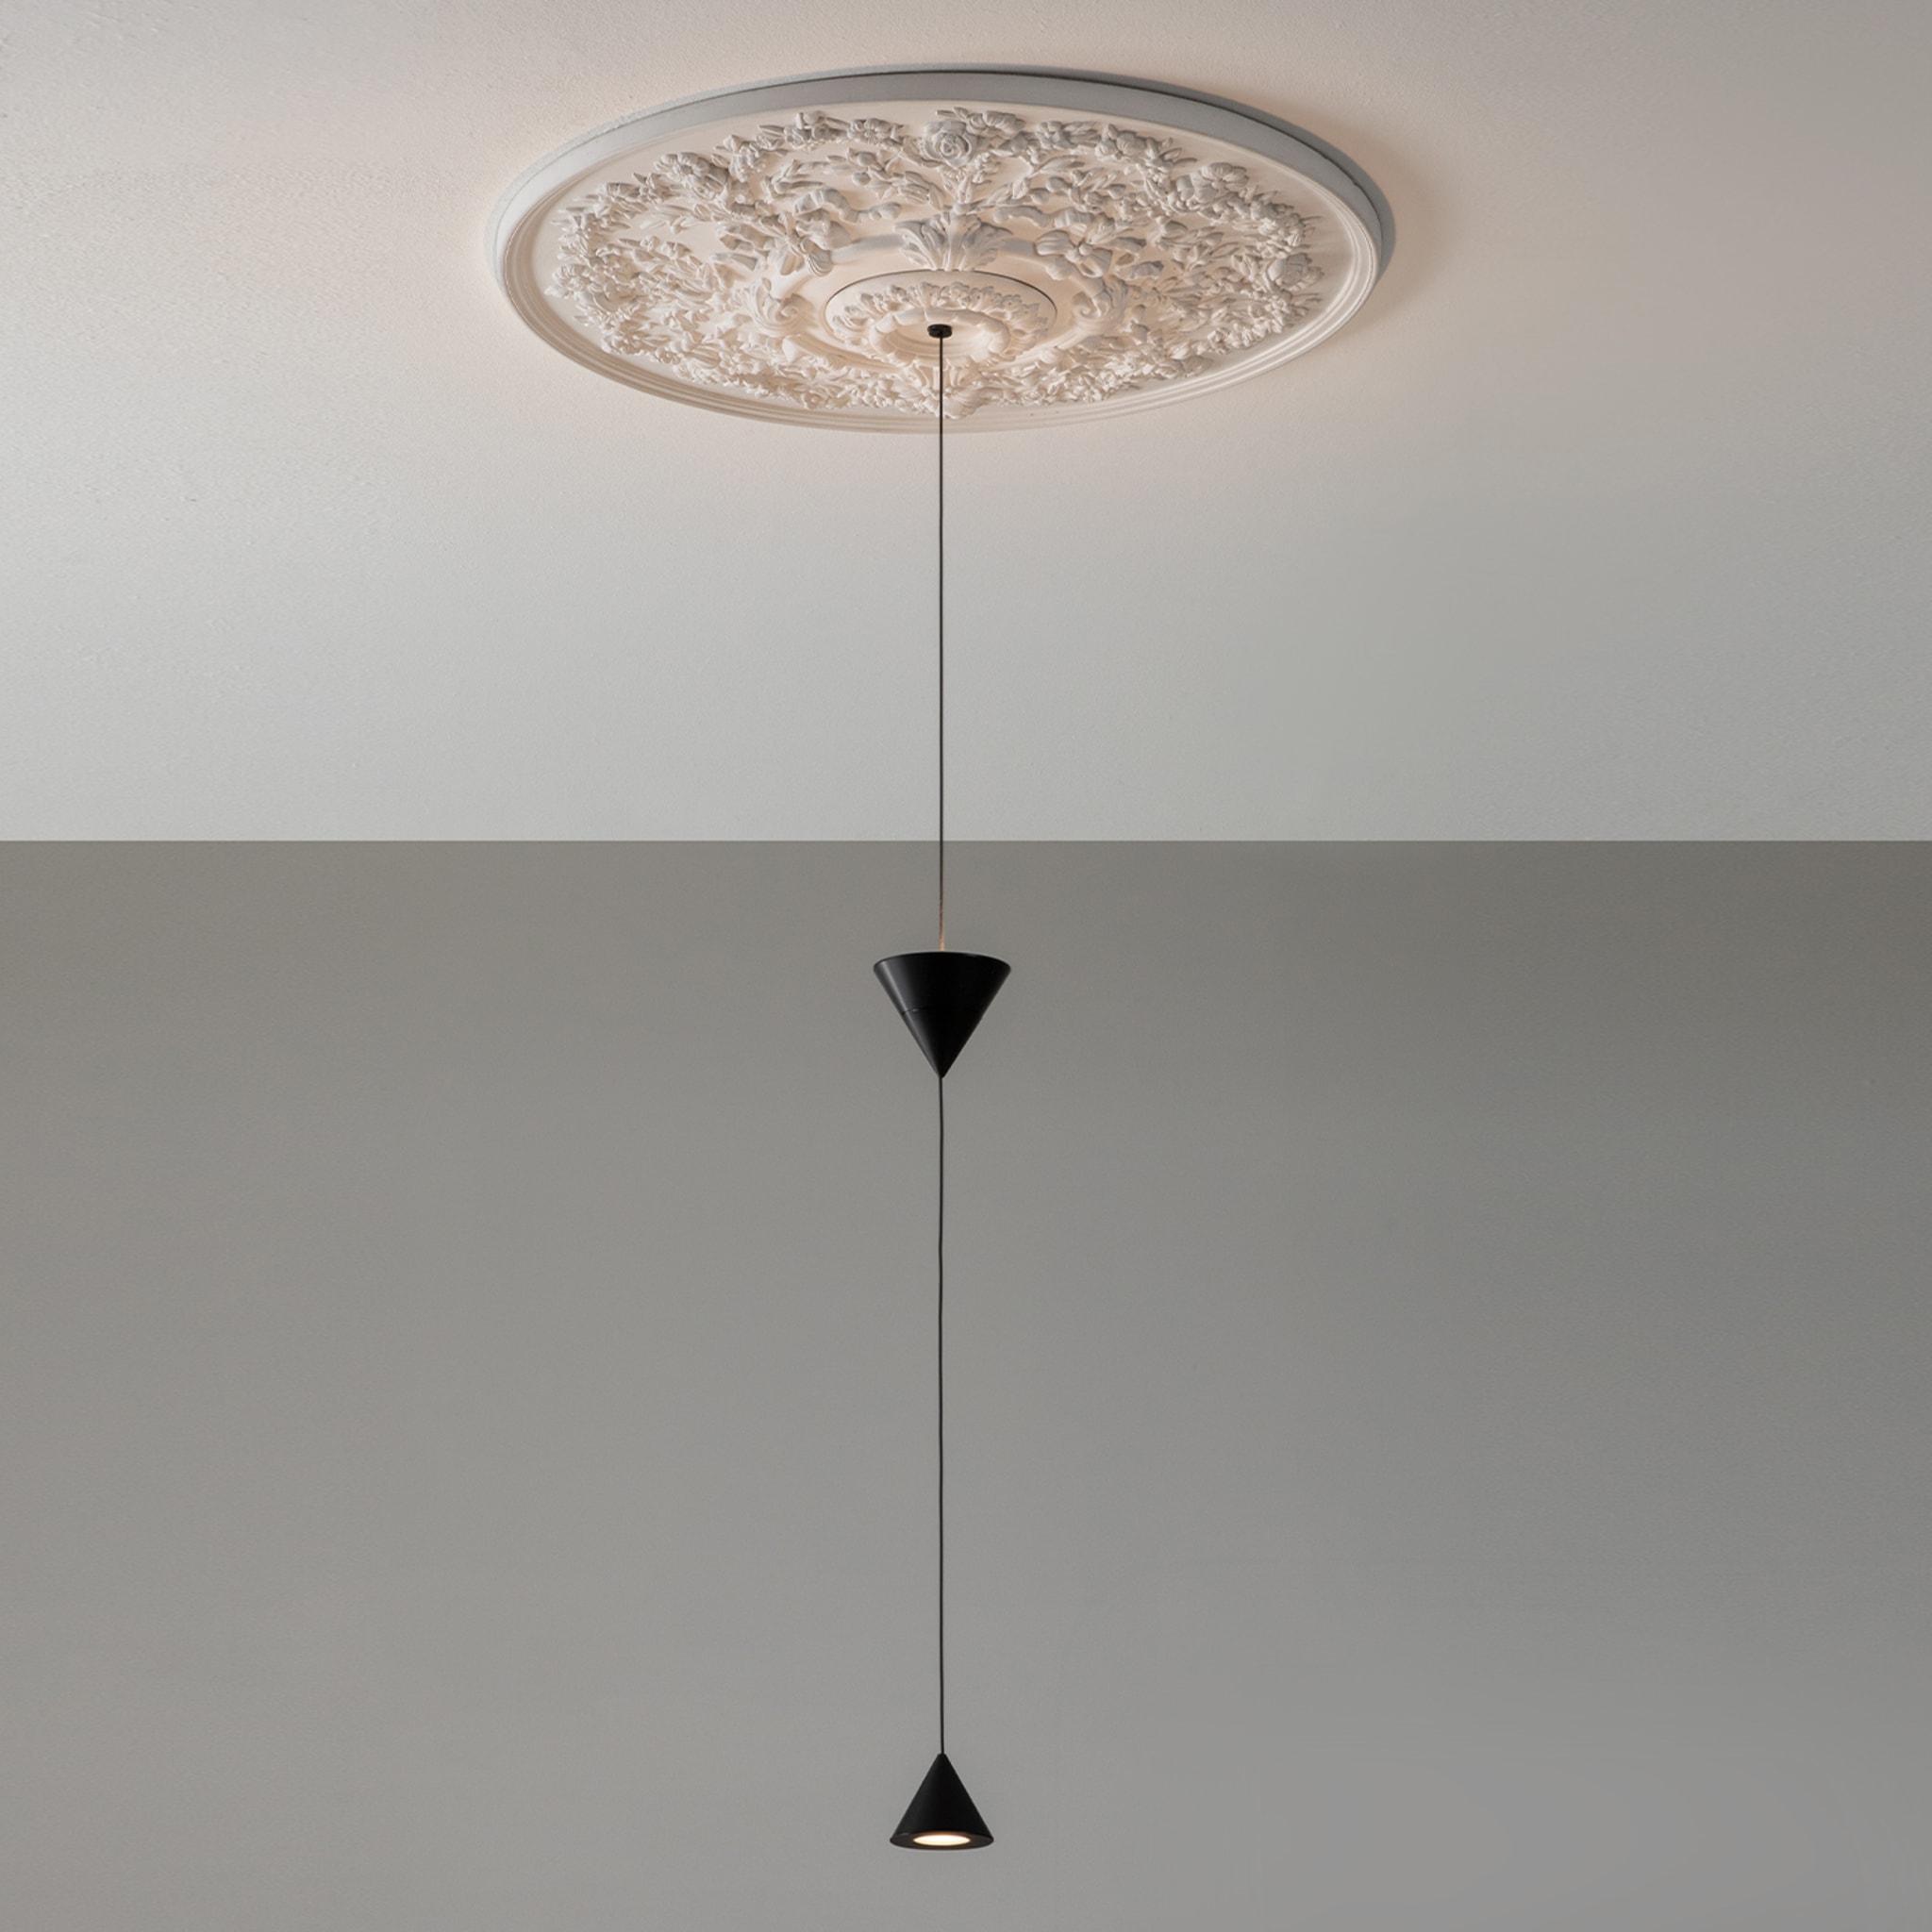 Moonbloom 2-Light Pendant Lamp by Matteo Ugolini - Alternative view 1